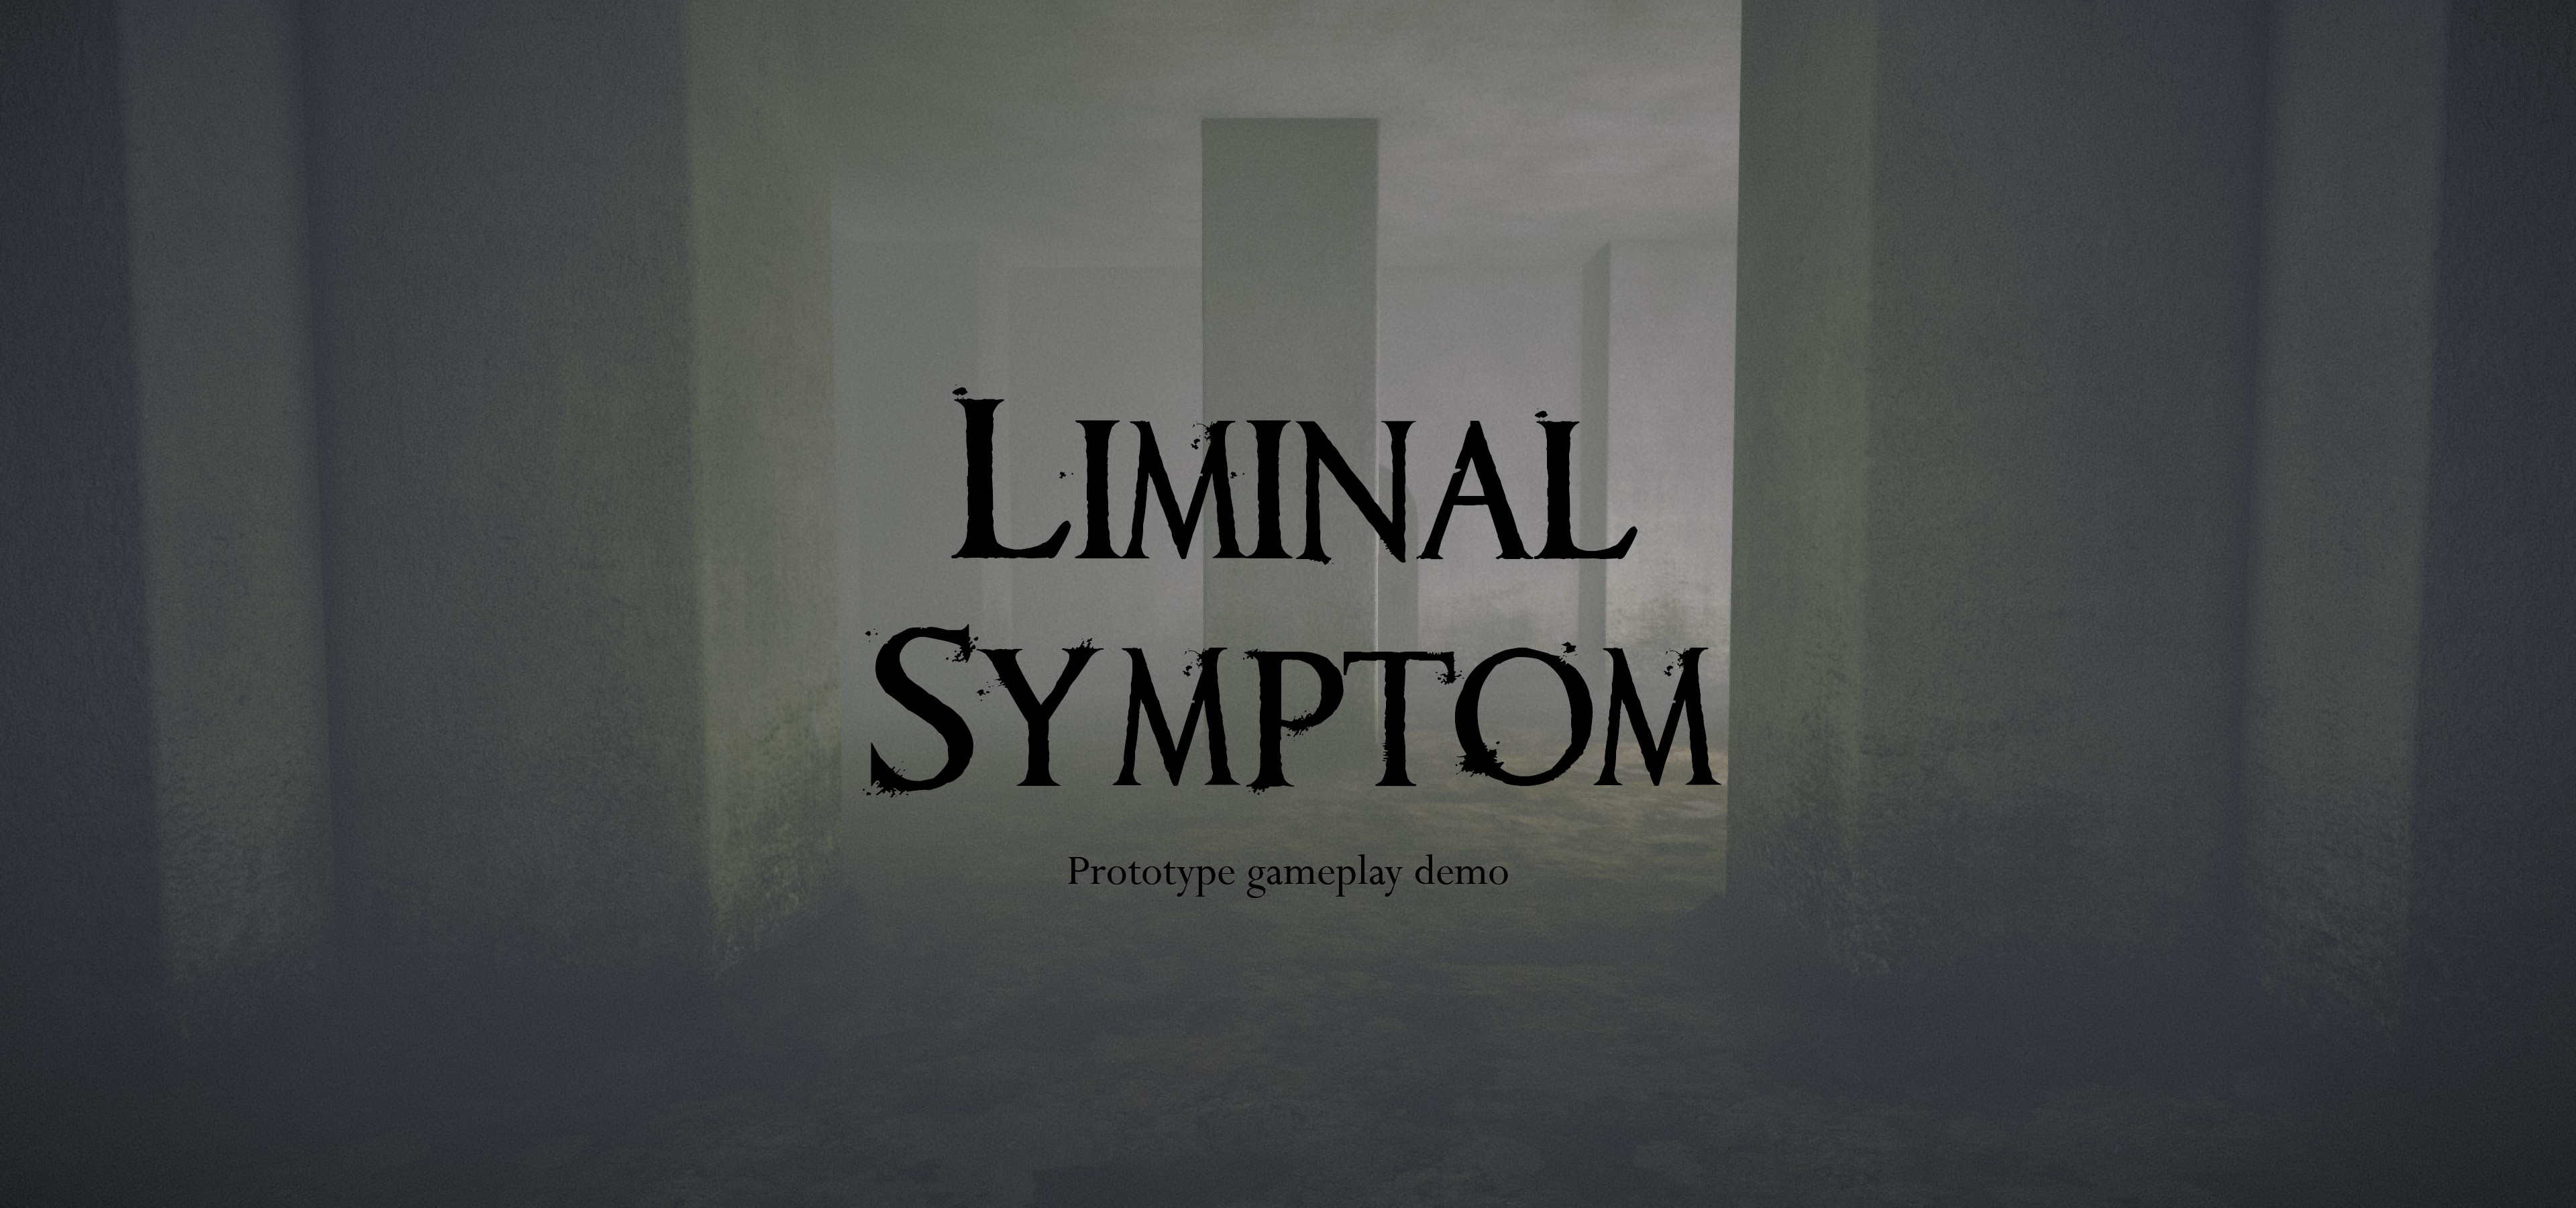 Liminal Symptom Prototype